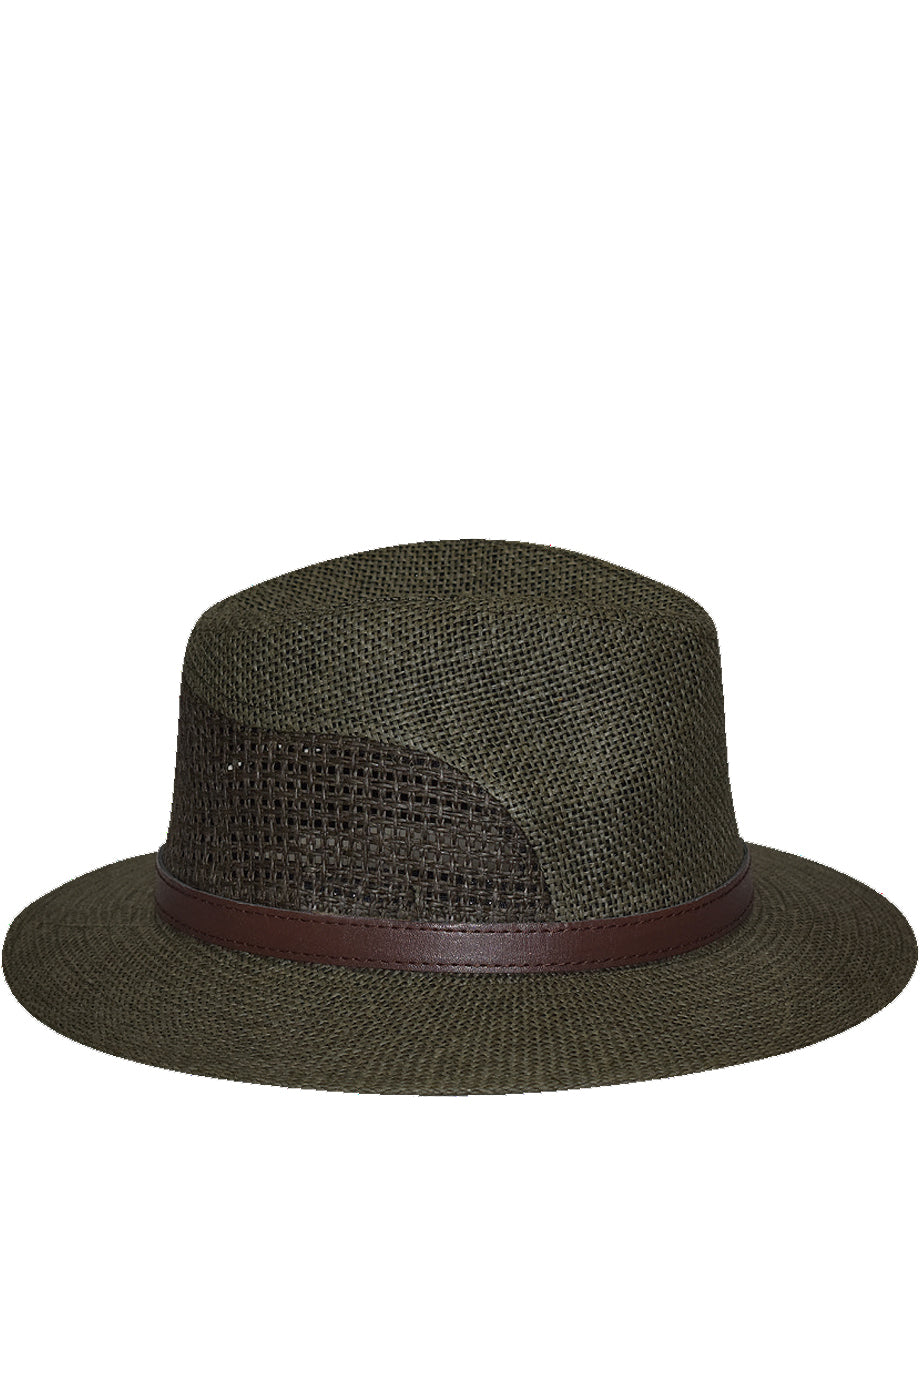 Vittorio Πράσινο Χειροποίητο Ψάθινο Καπέλο UNISEX | Γυναικεία Ψάθινα Καπέλα Παραλίας